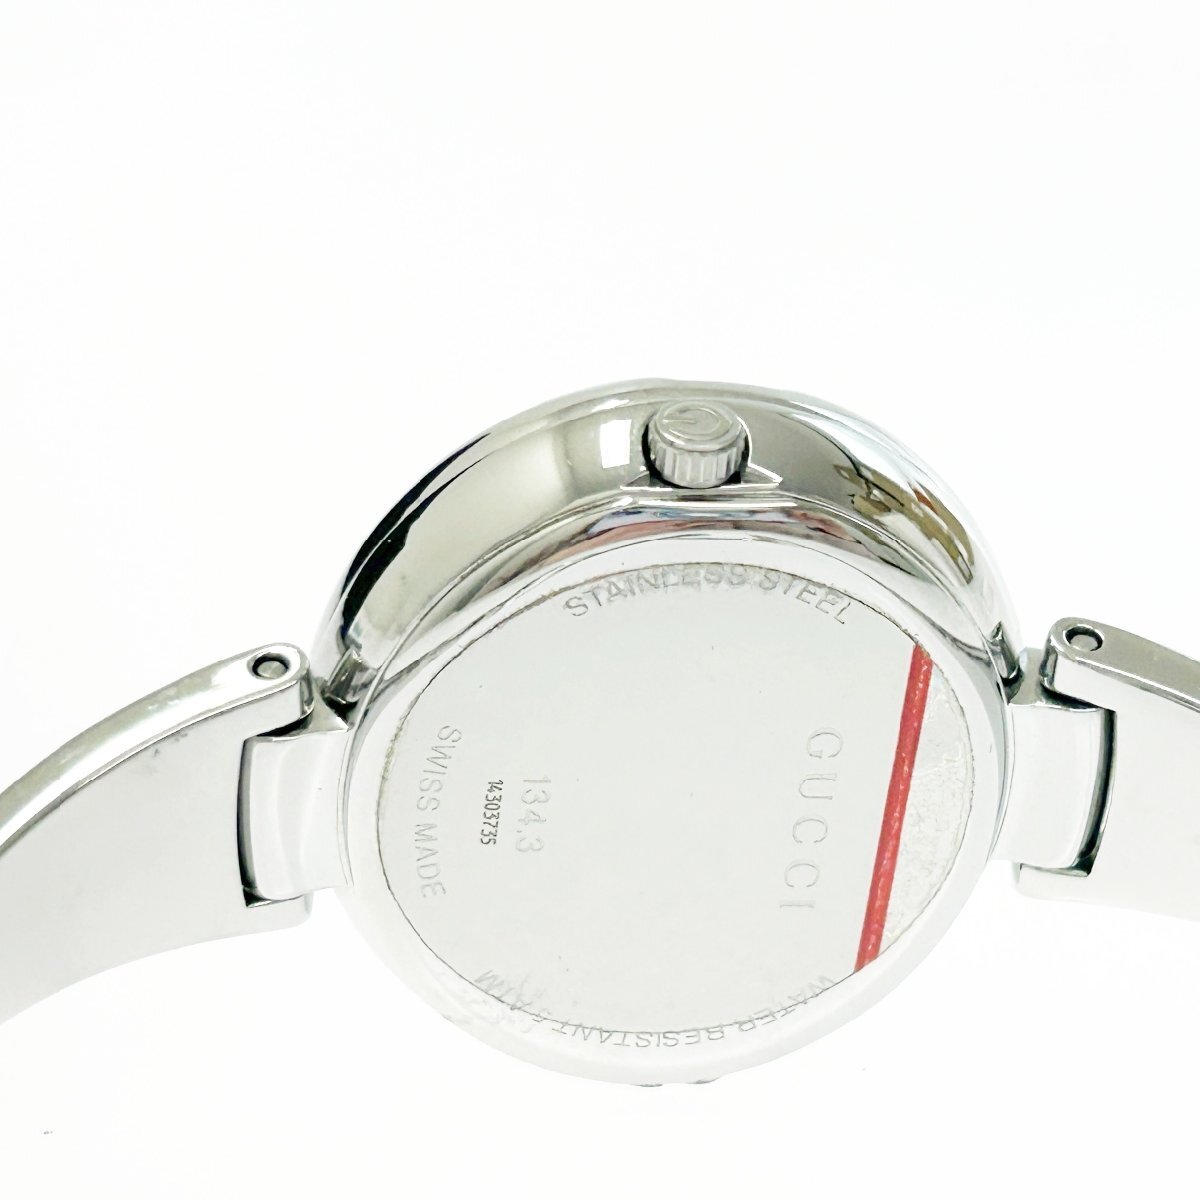 [1 иен старт ][ с коробкой ]GUCCI Gucci 134.3 SS черный циферблат кварц женские наручные часы 272816